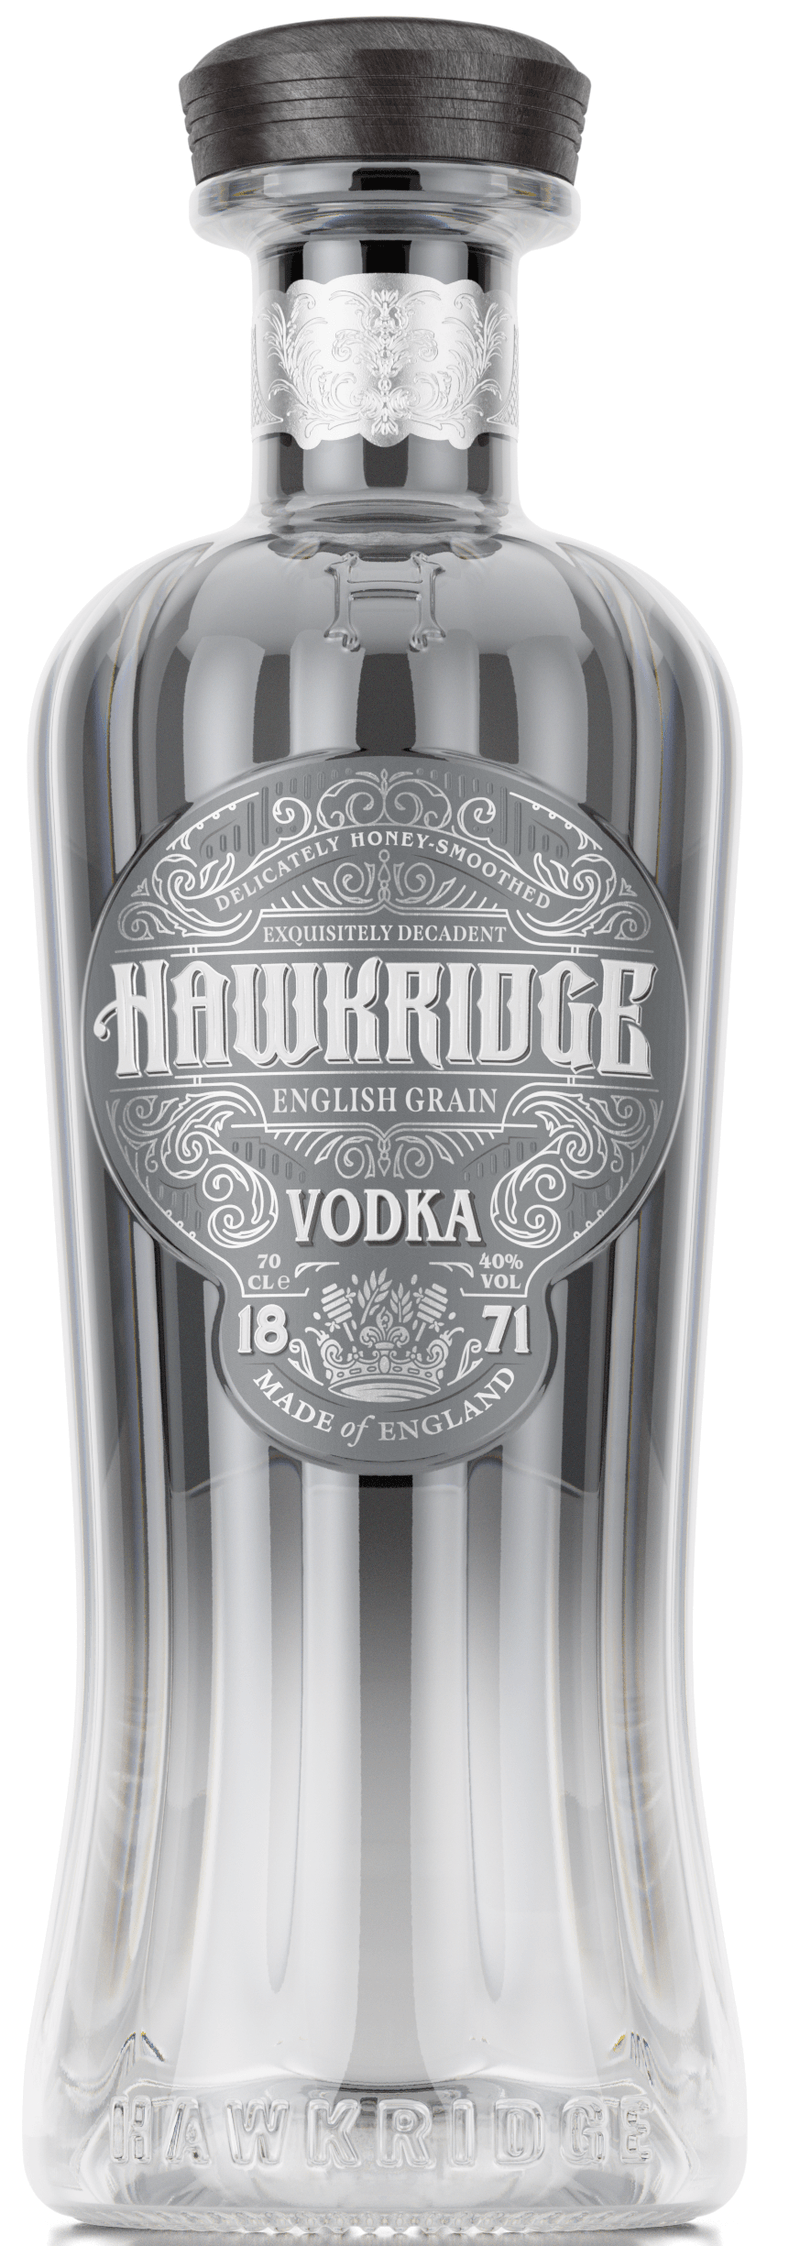 Hawkridge English Grain Vodka 70cl